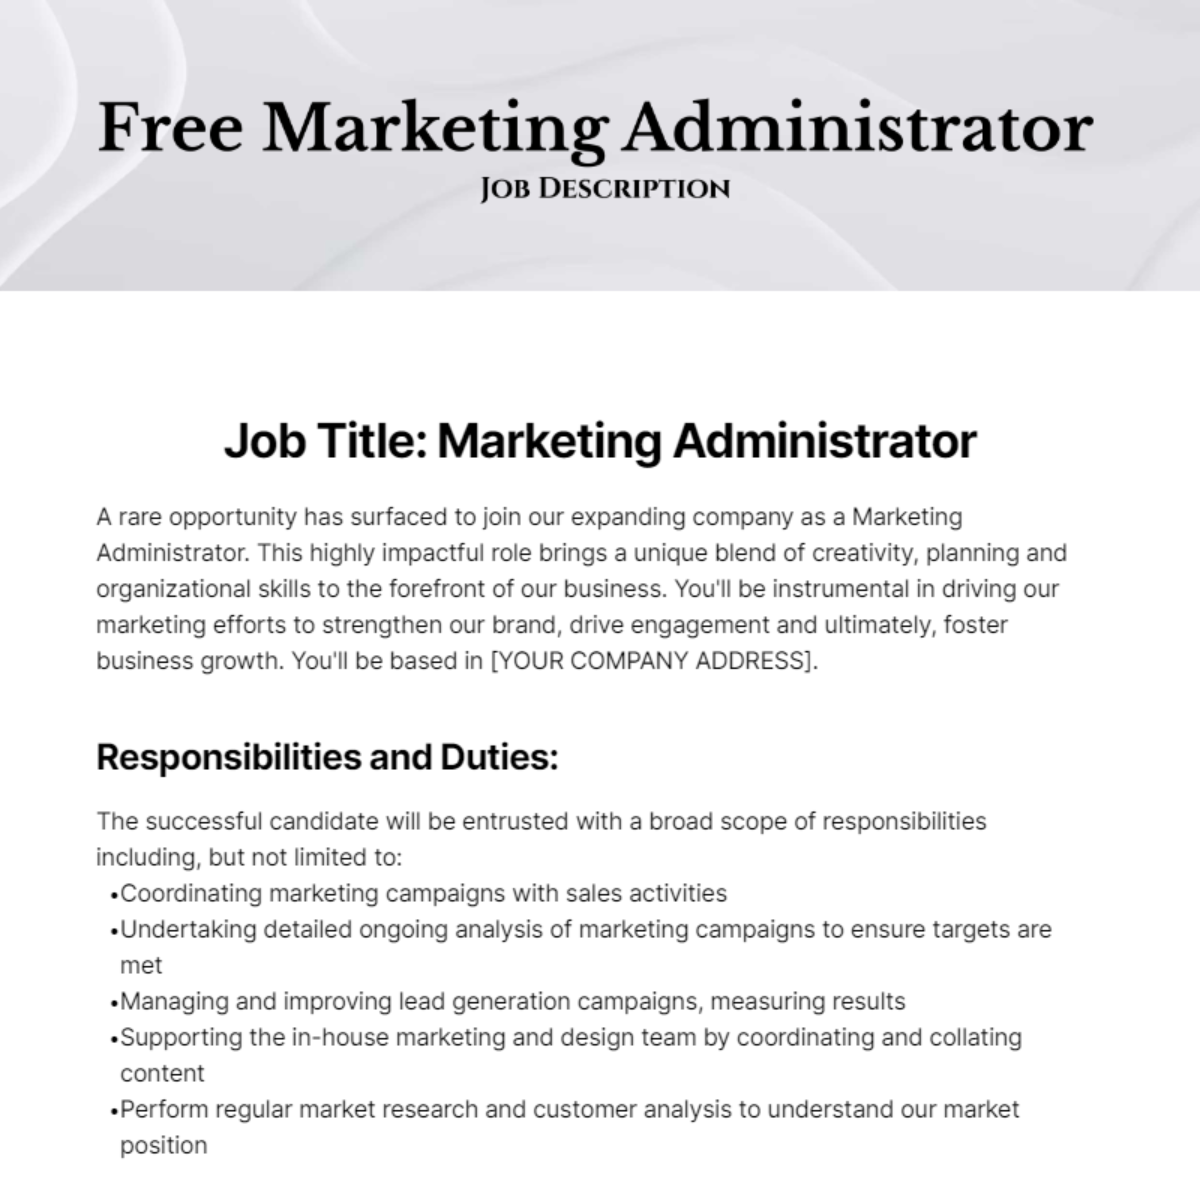 Marketing Administrator Job Description Template